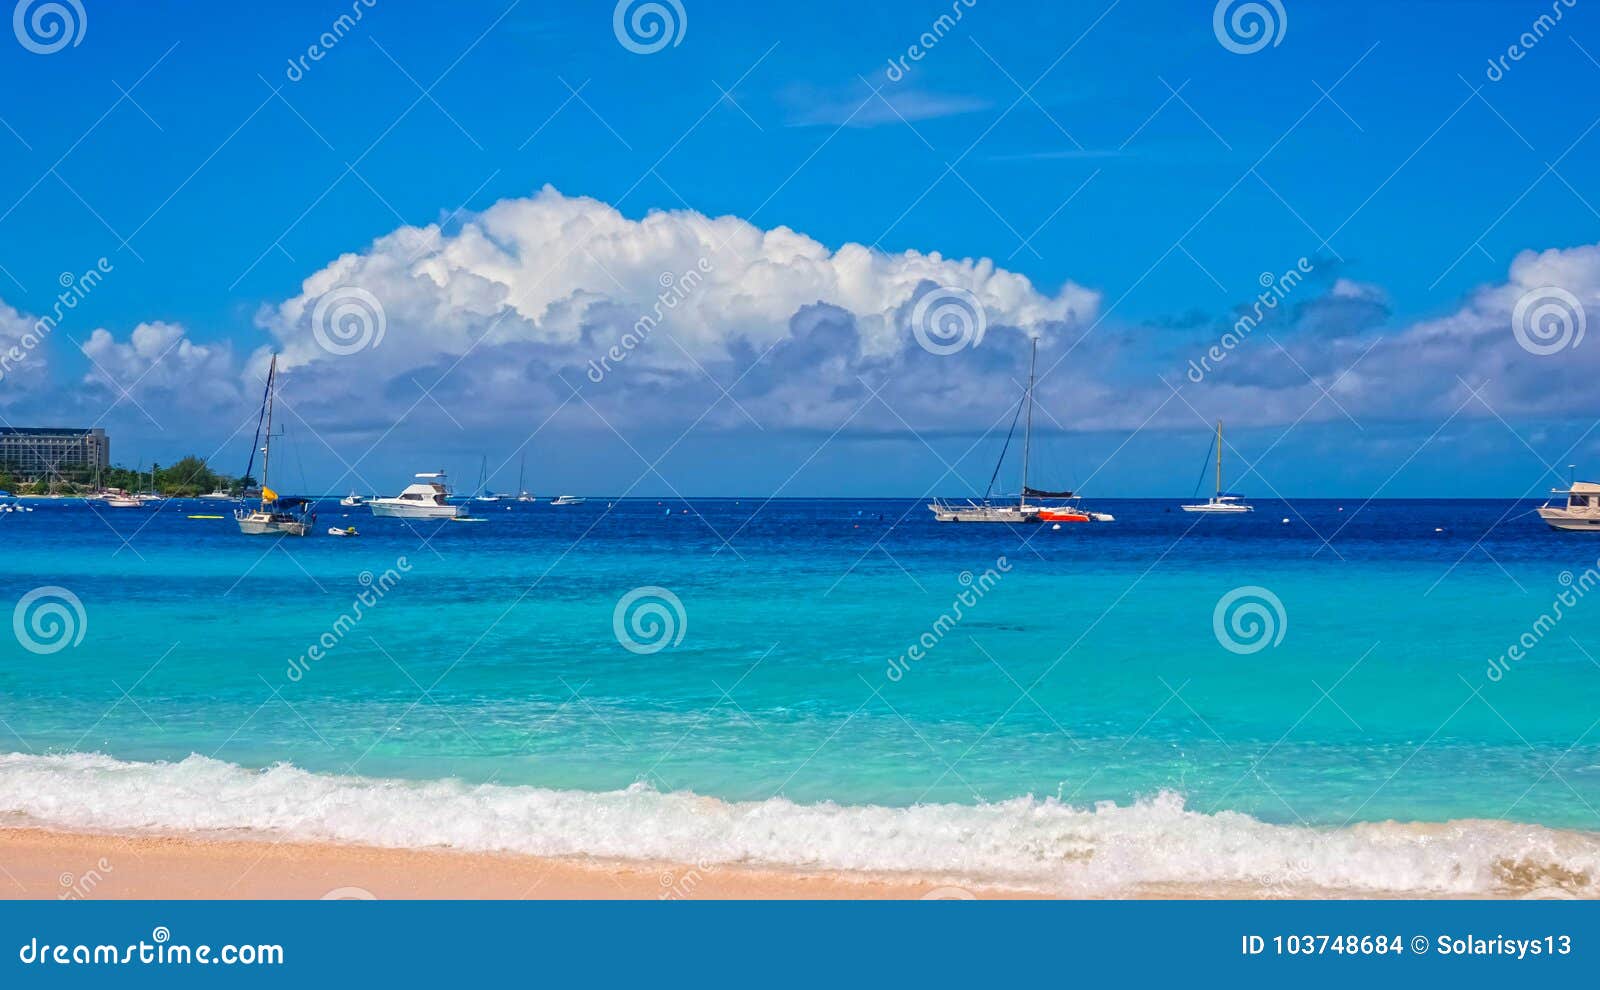 The Tropical Beach Barbados Caribbean Editorial Stock Image Image